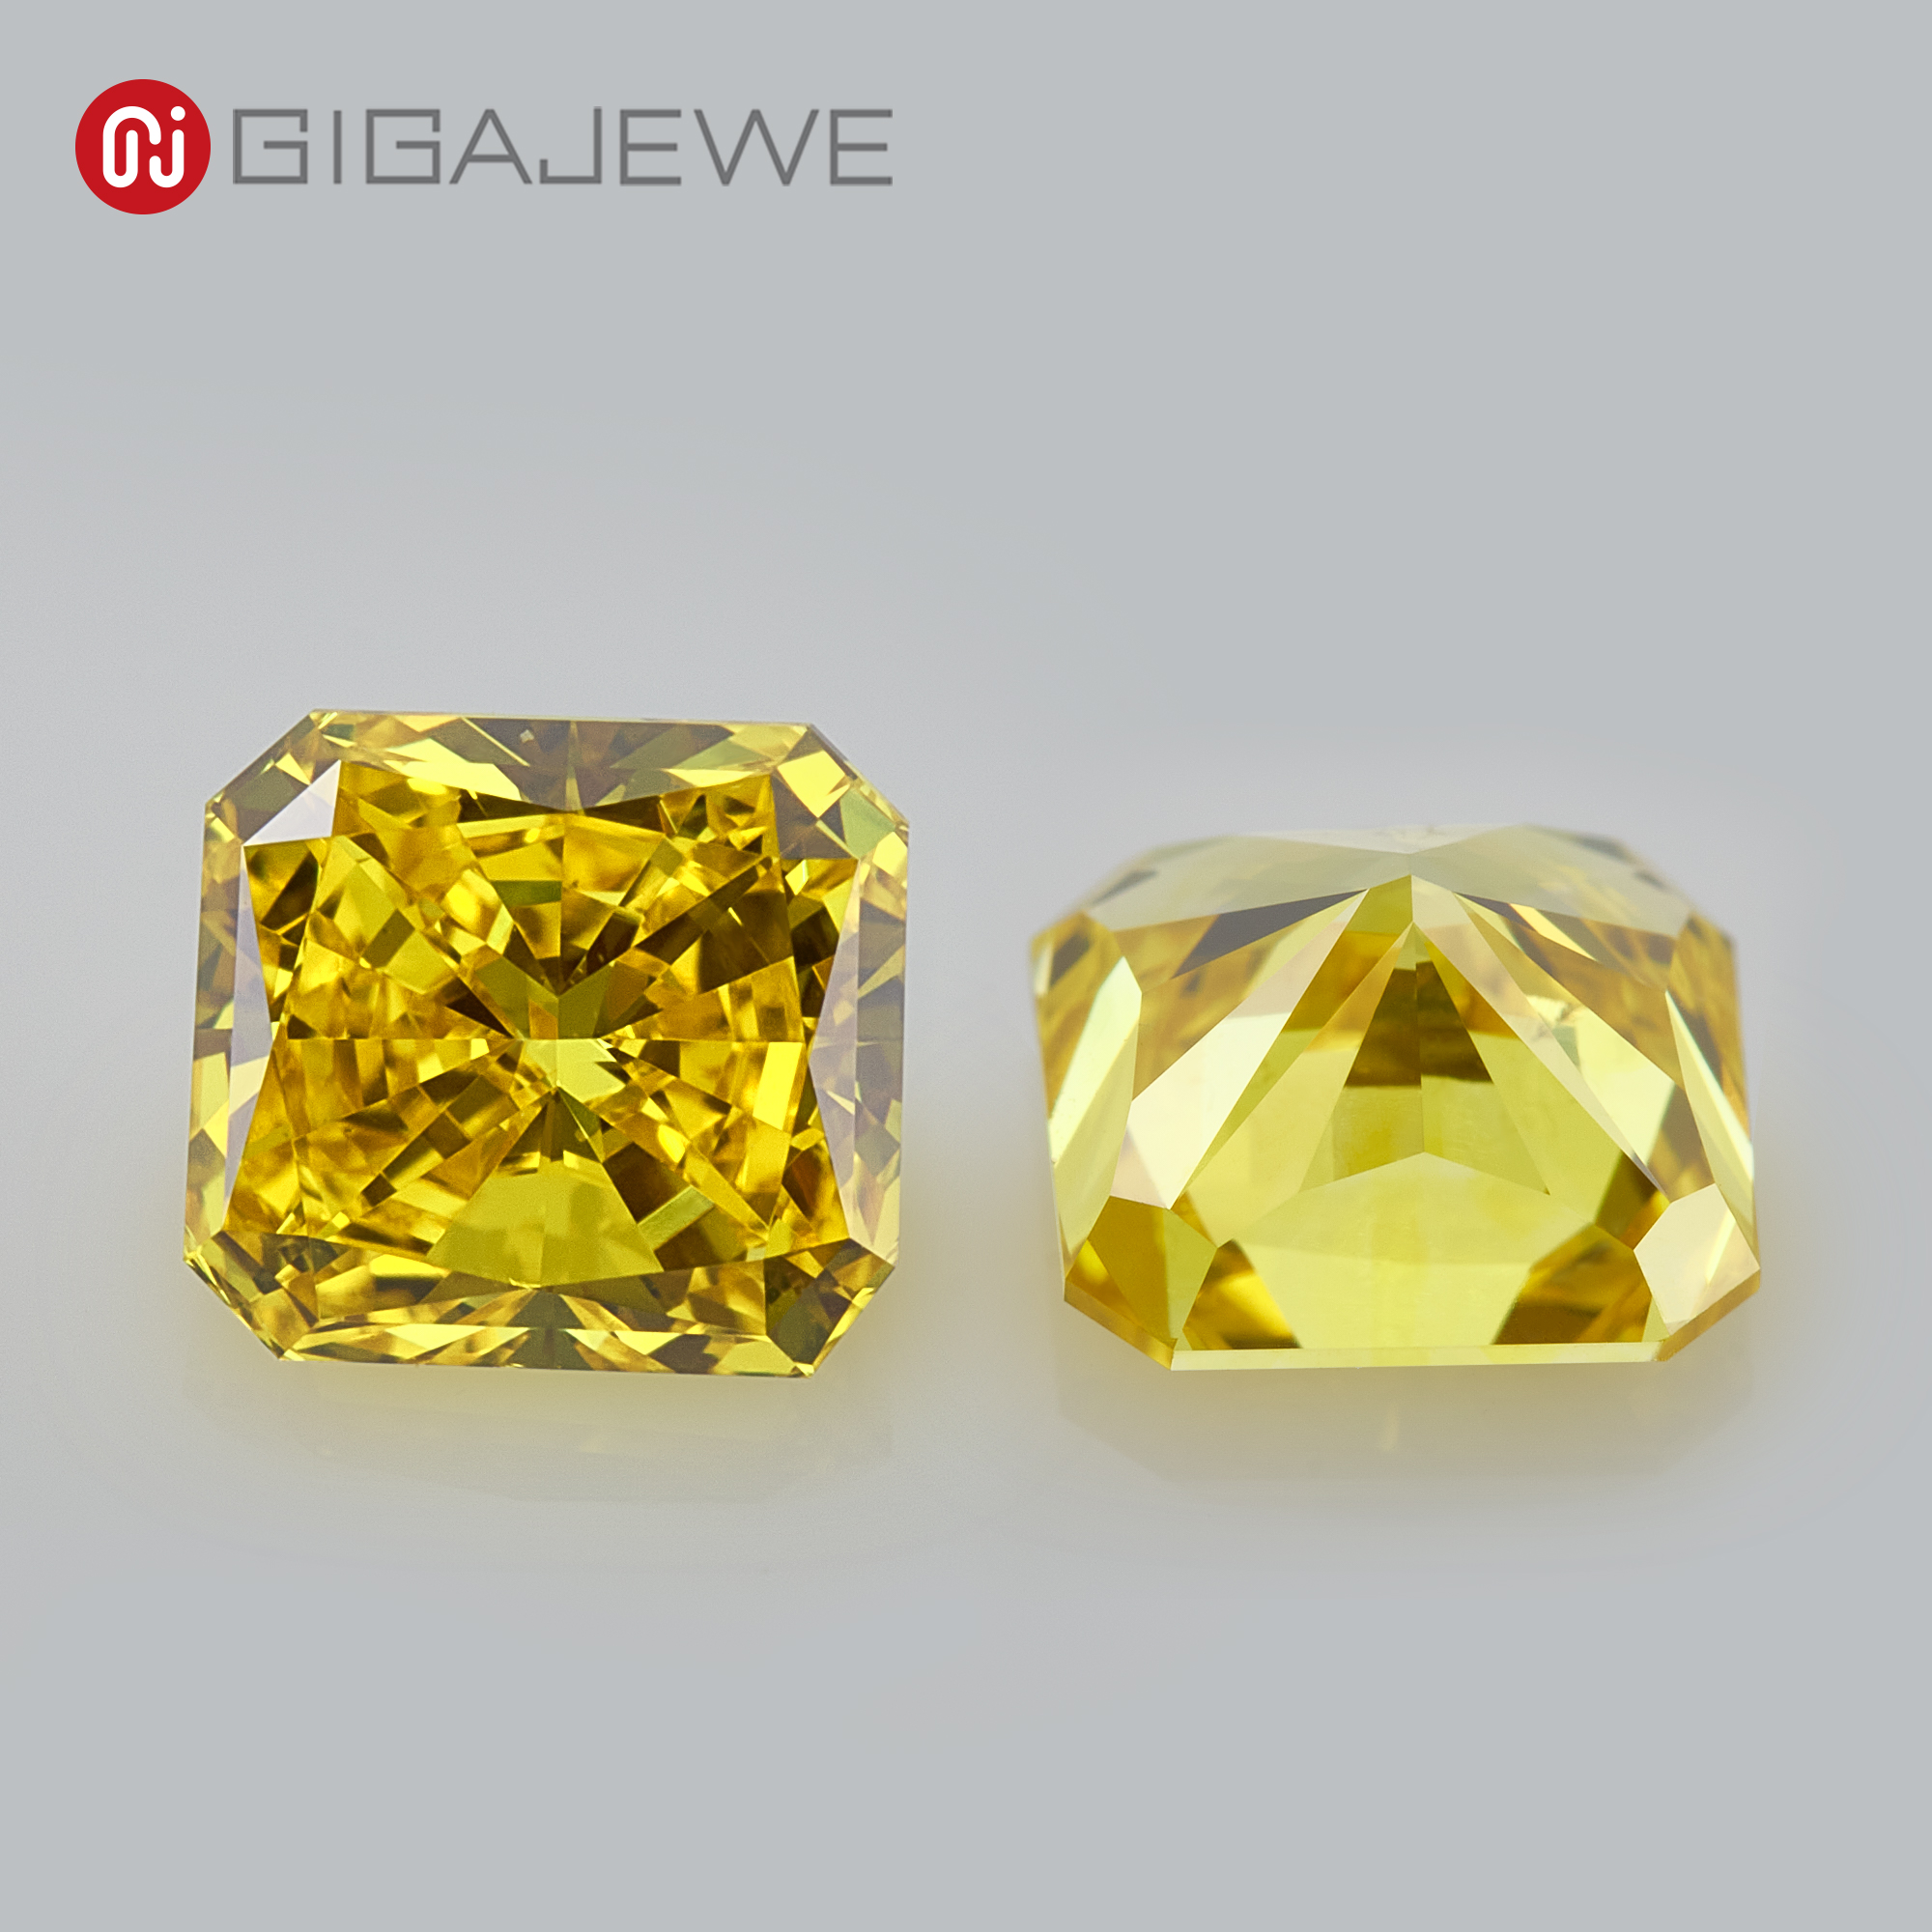 GIGAJEWE 1.417 克拉裸钻 HPHT 黄色抛光钻石实验室培育 Radiant 明亮式切割